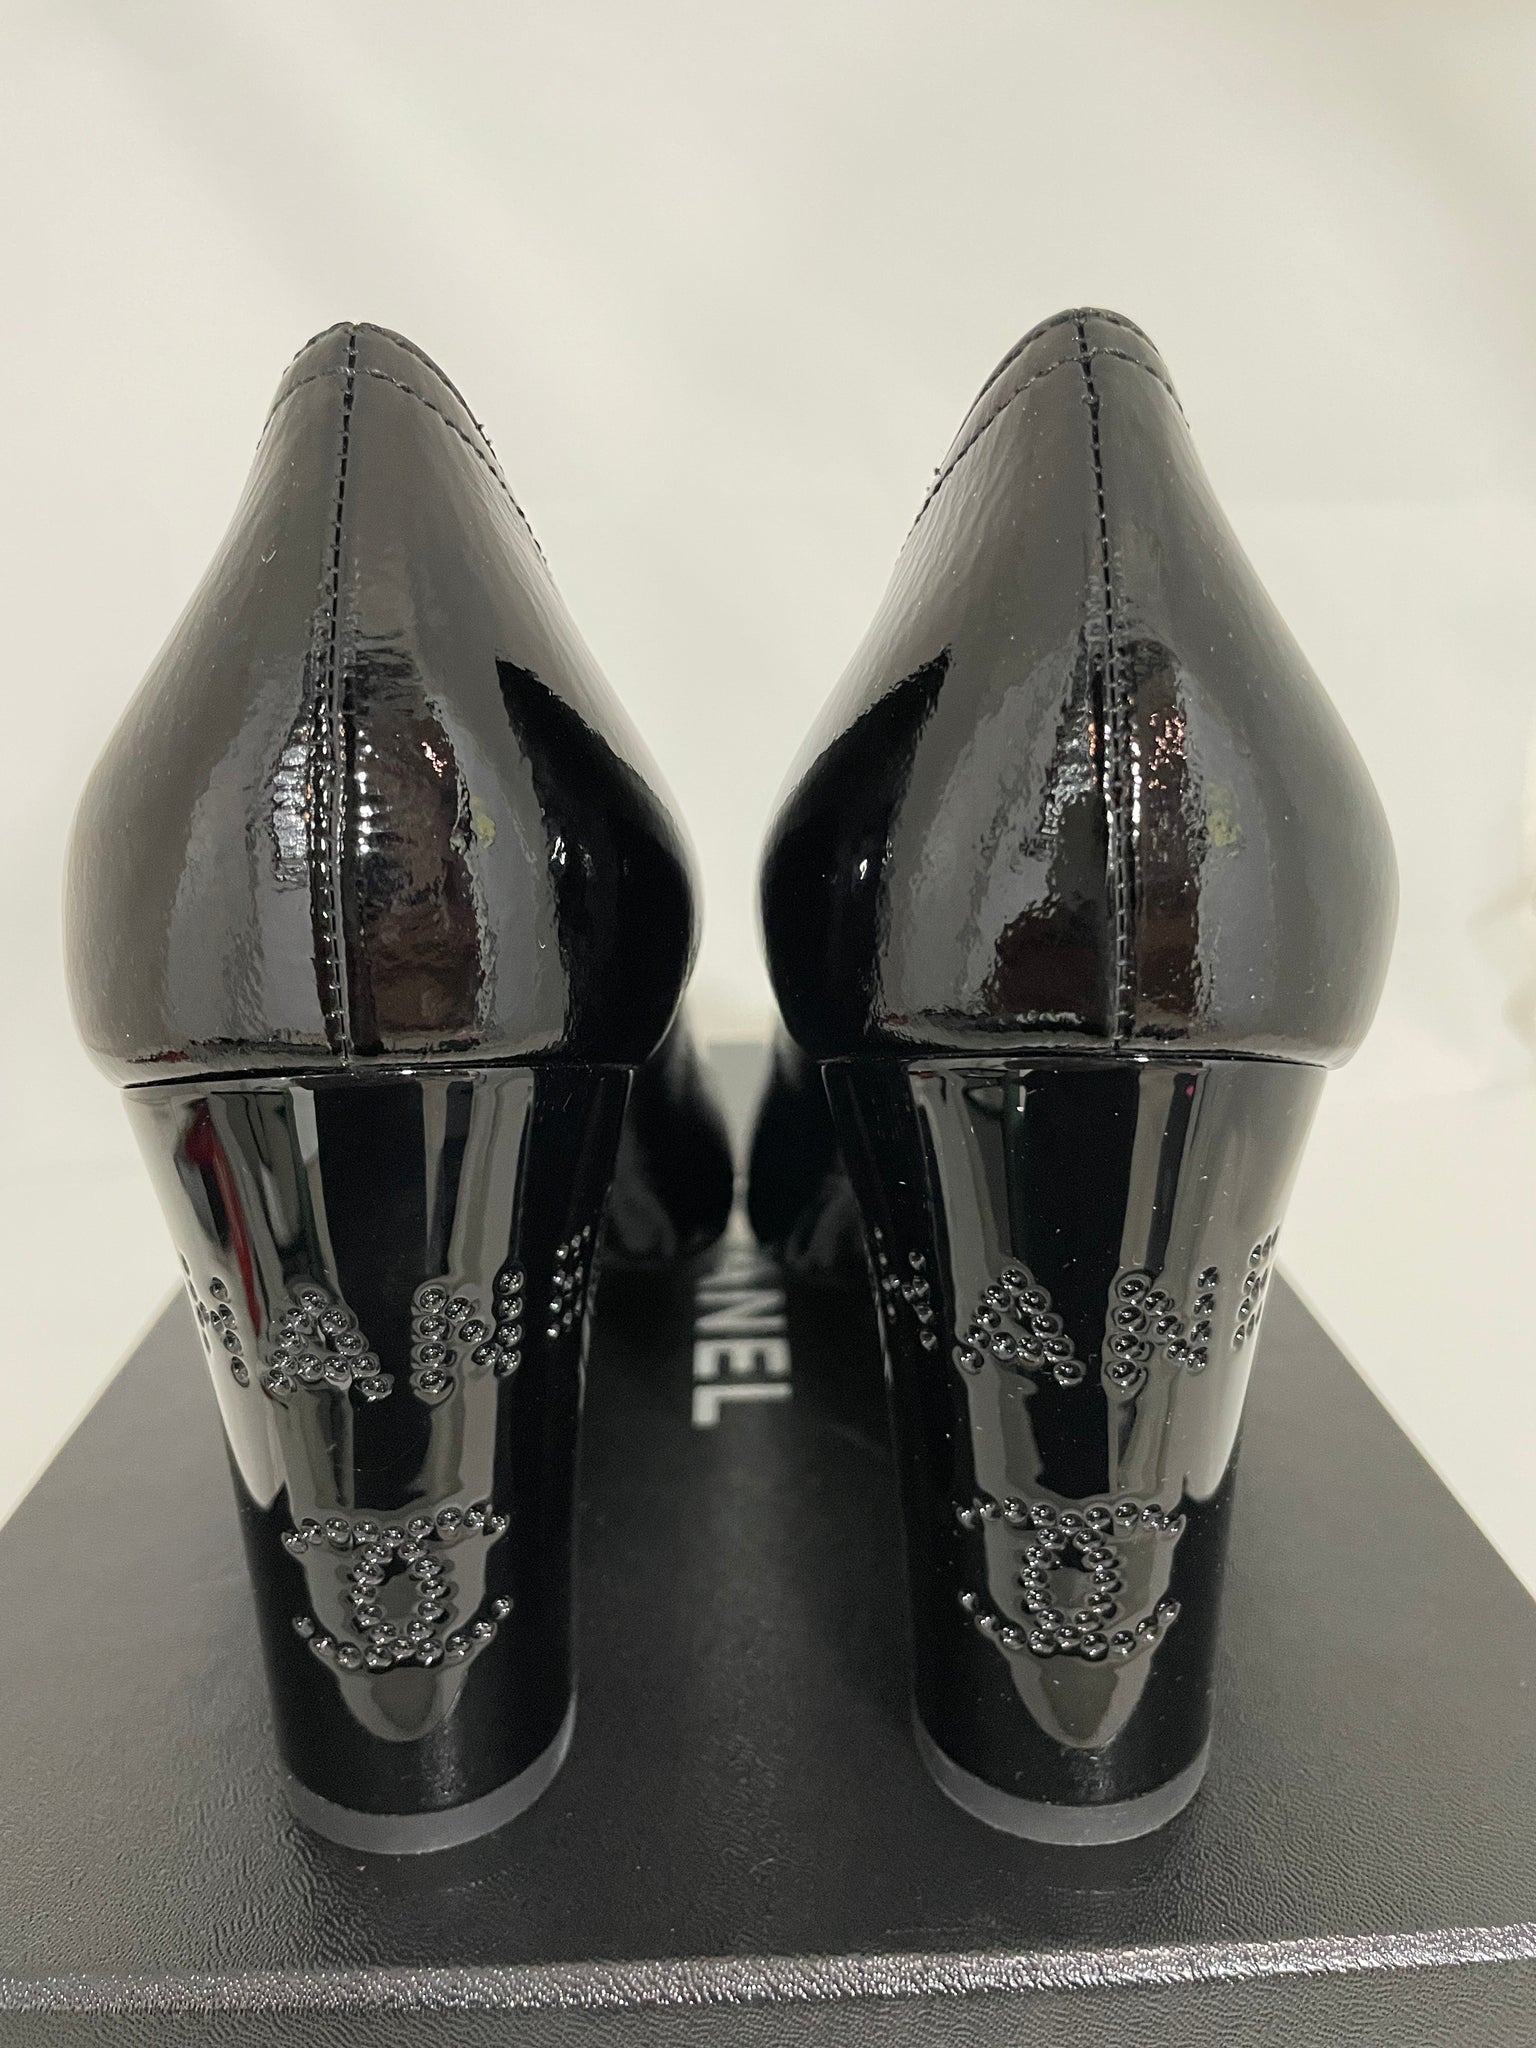 Chanel 19A NWB patent leather black pumps